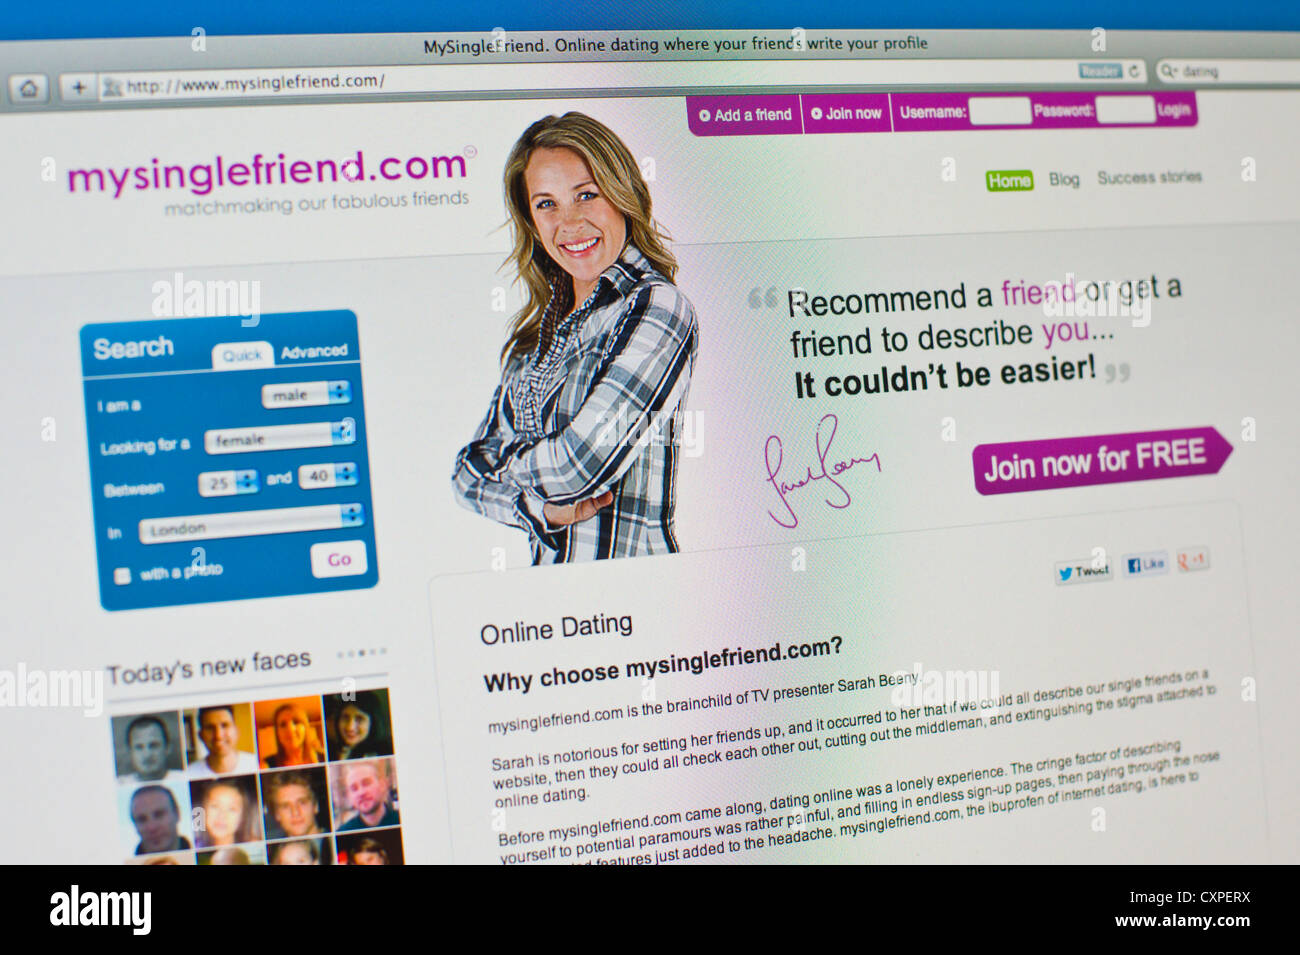 mysinglefriend.com online dating website Stock Photo